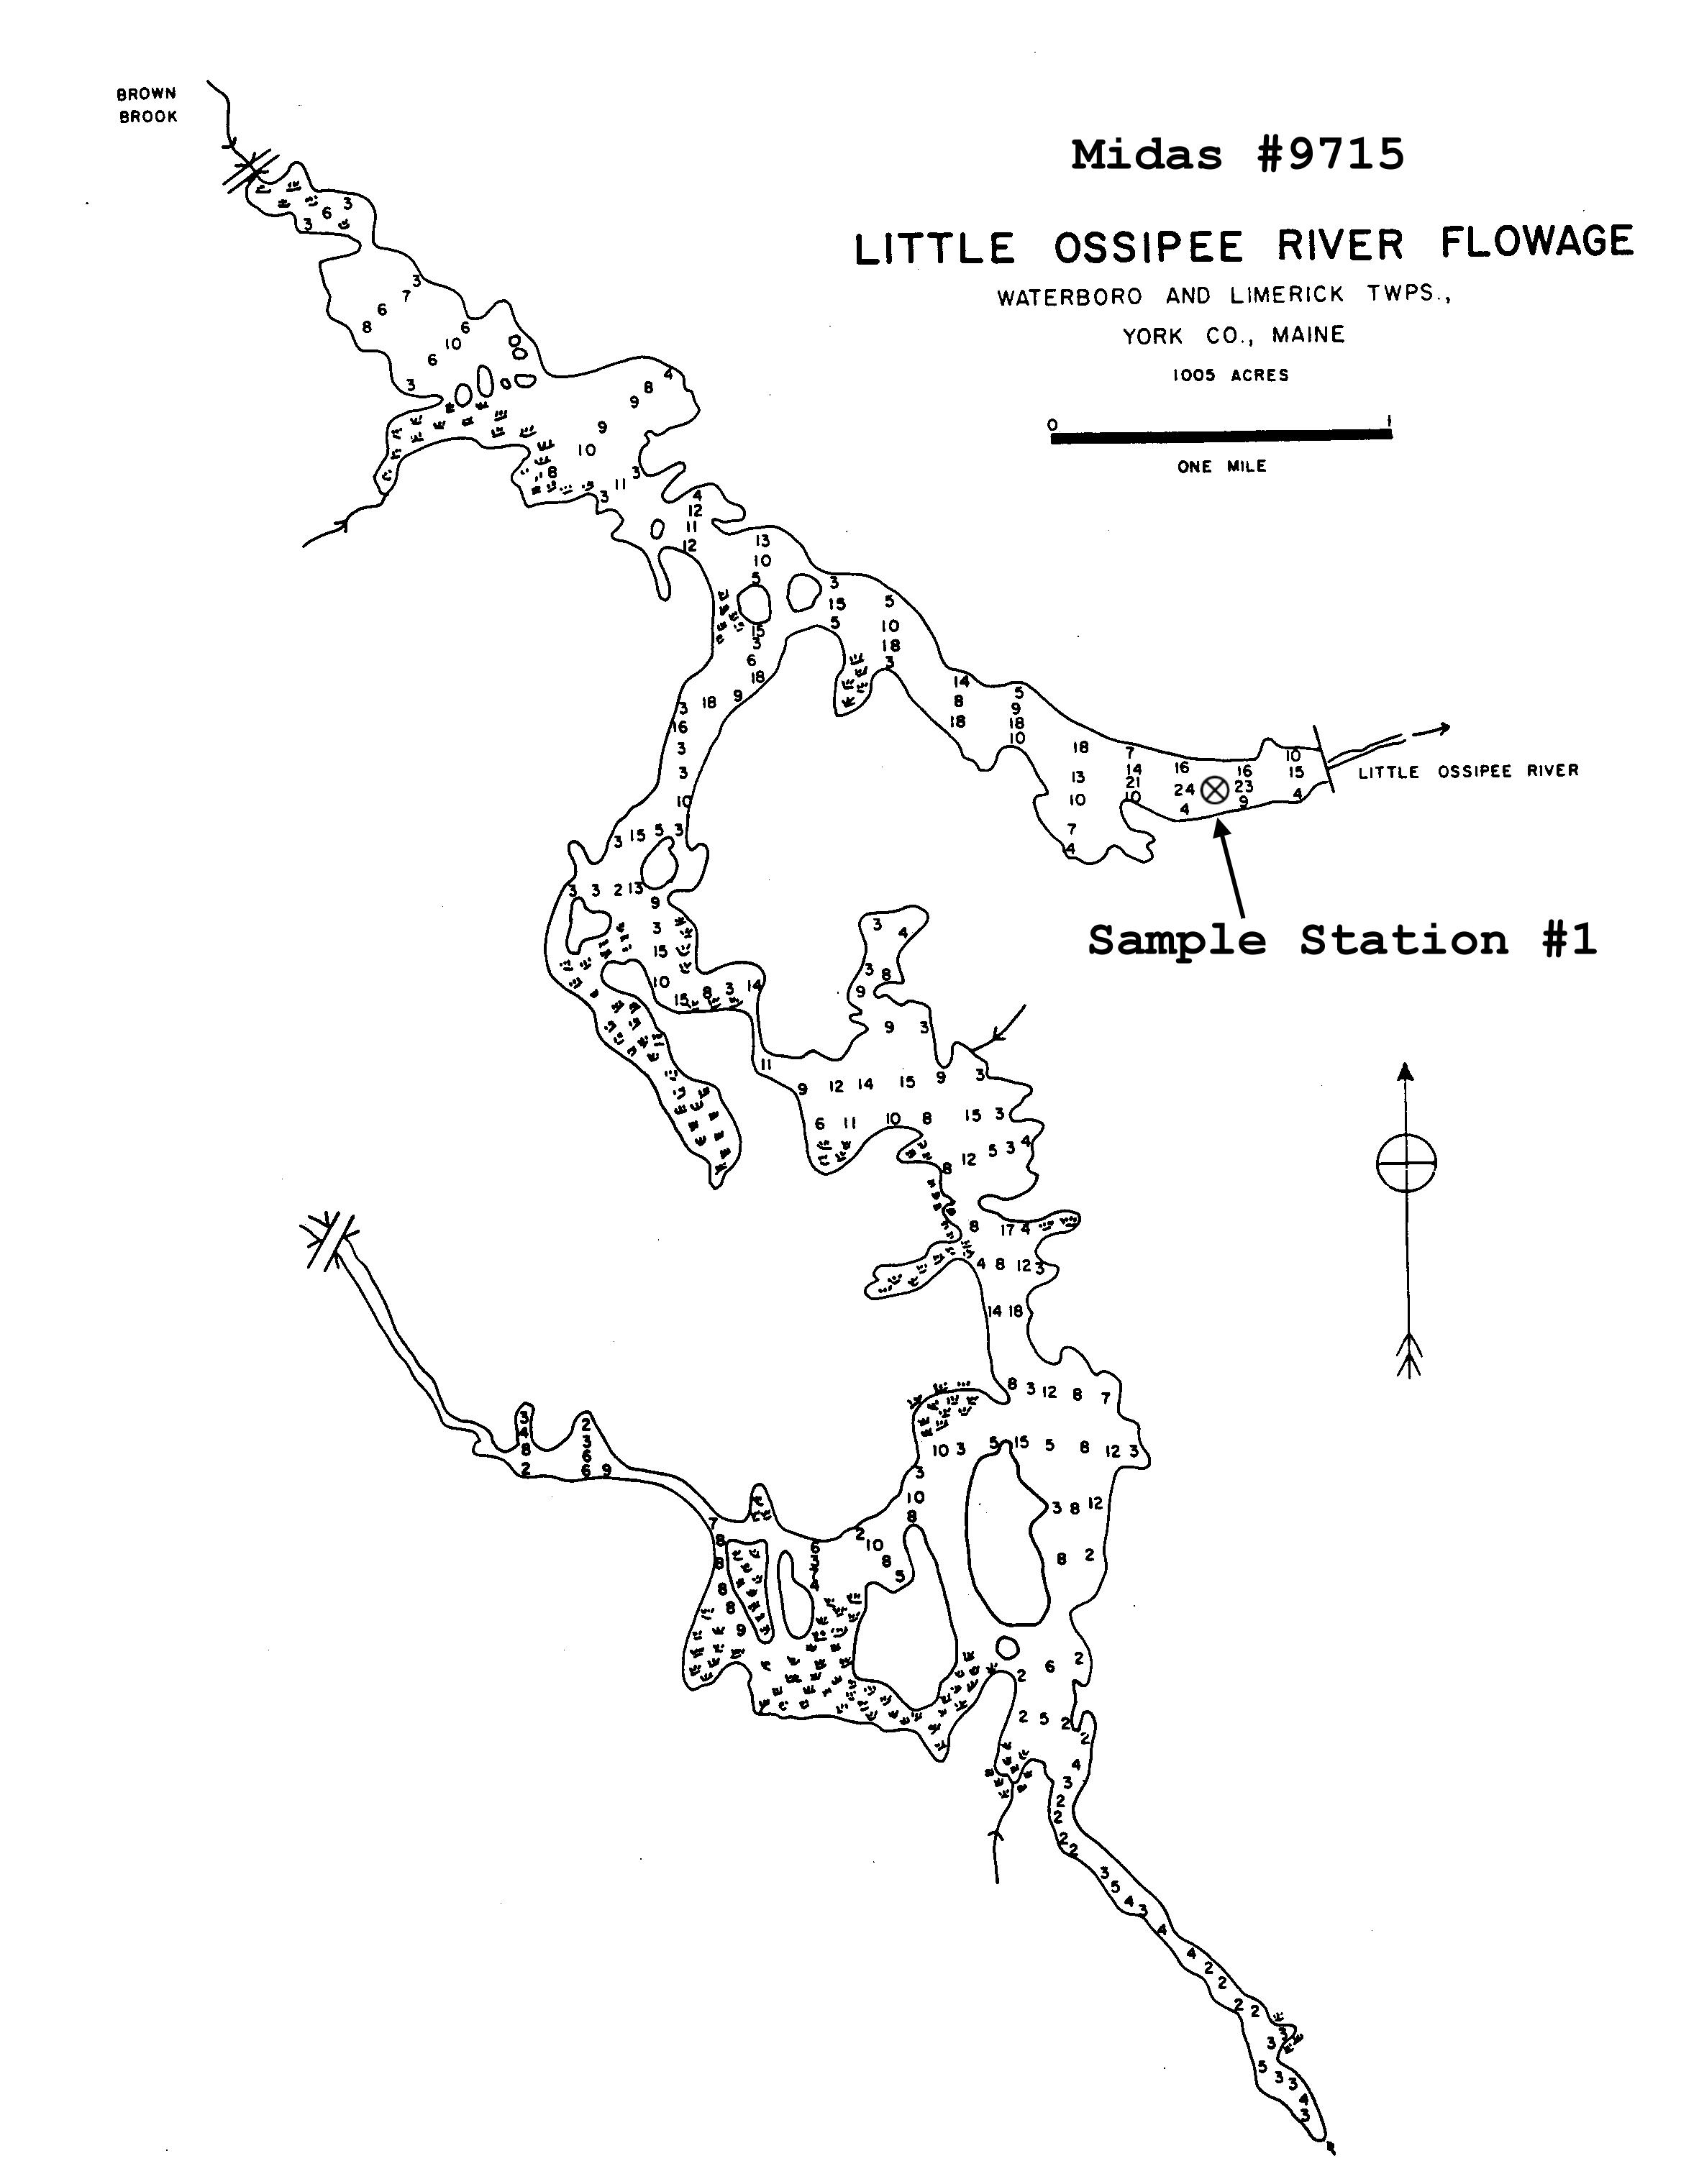 Ossipee Lake Depth Chart